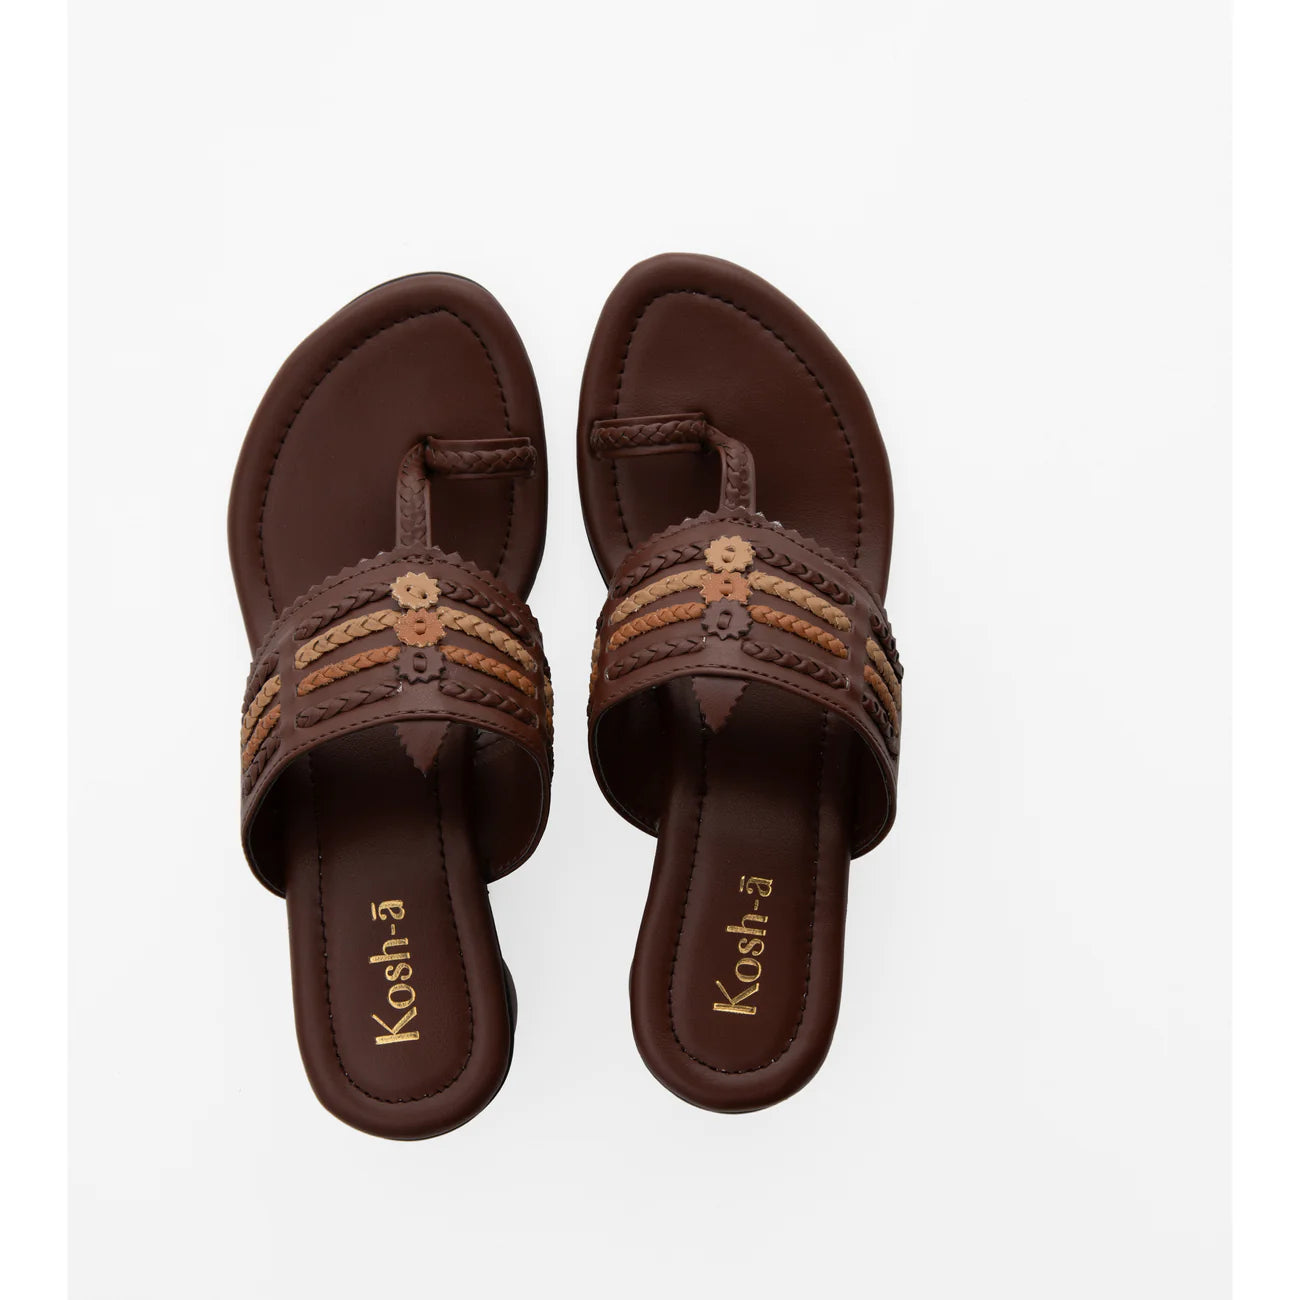 brown sandals with round heels